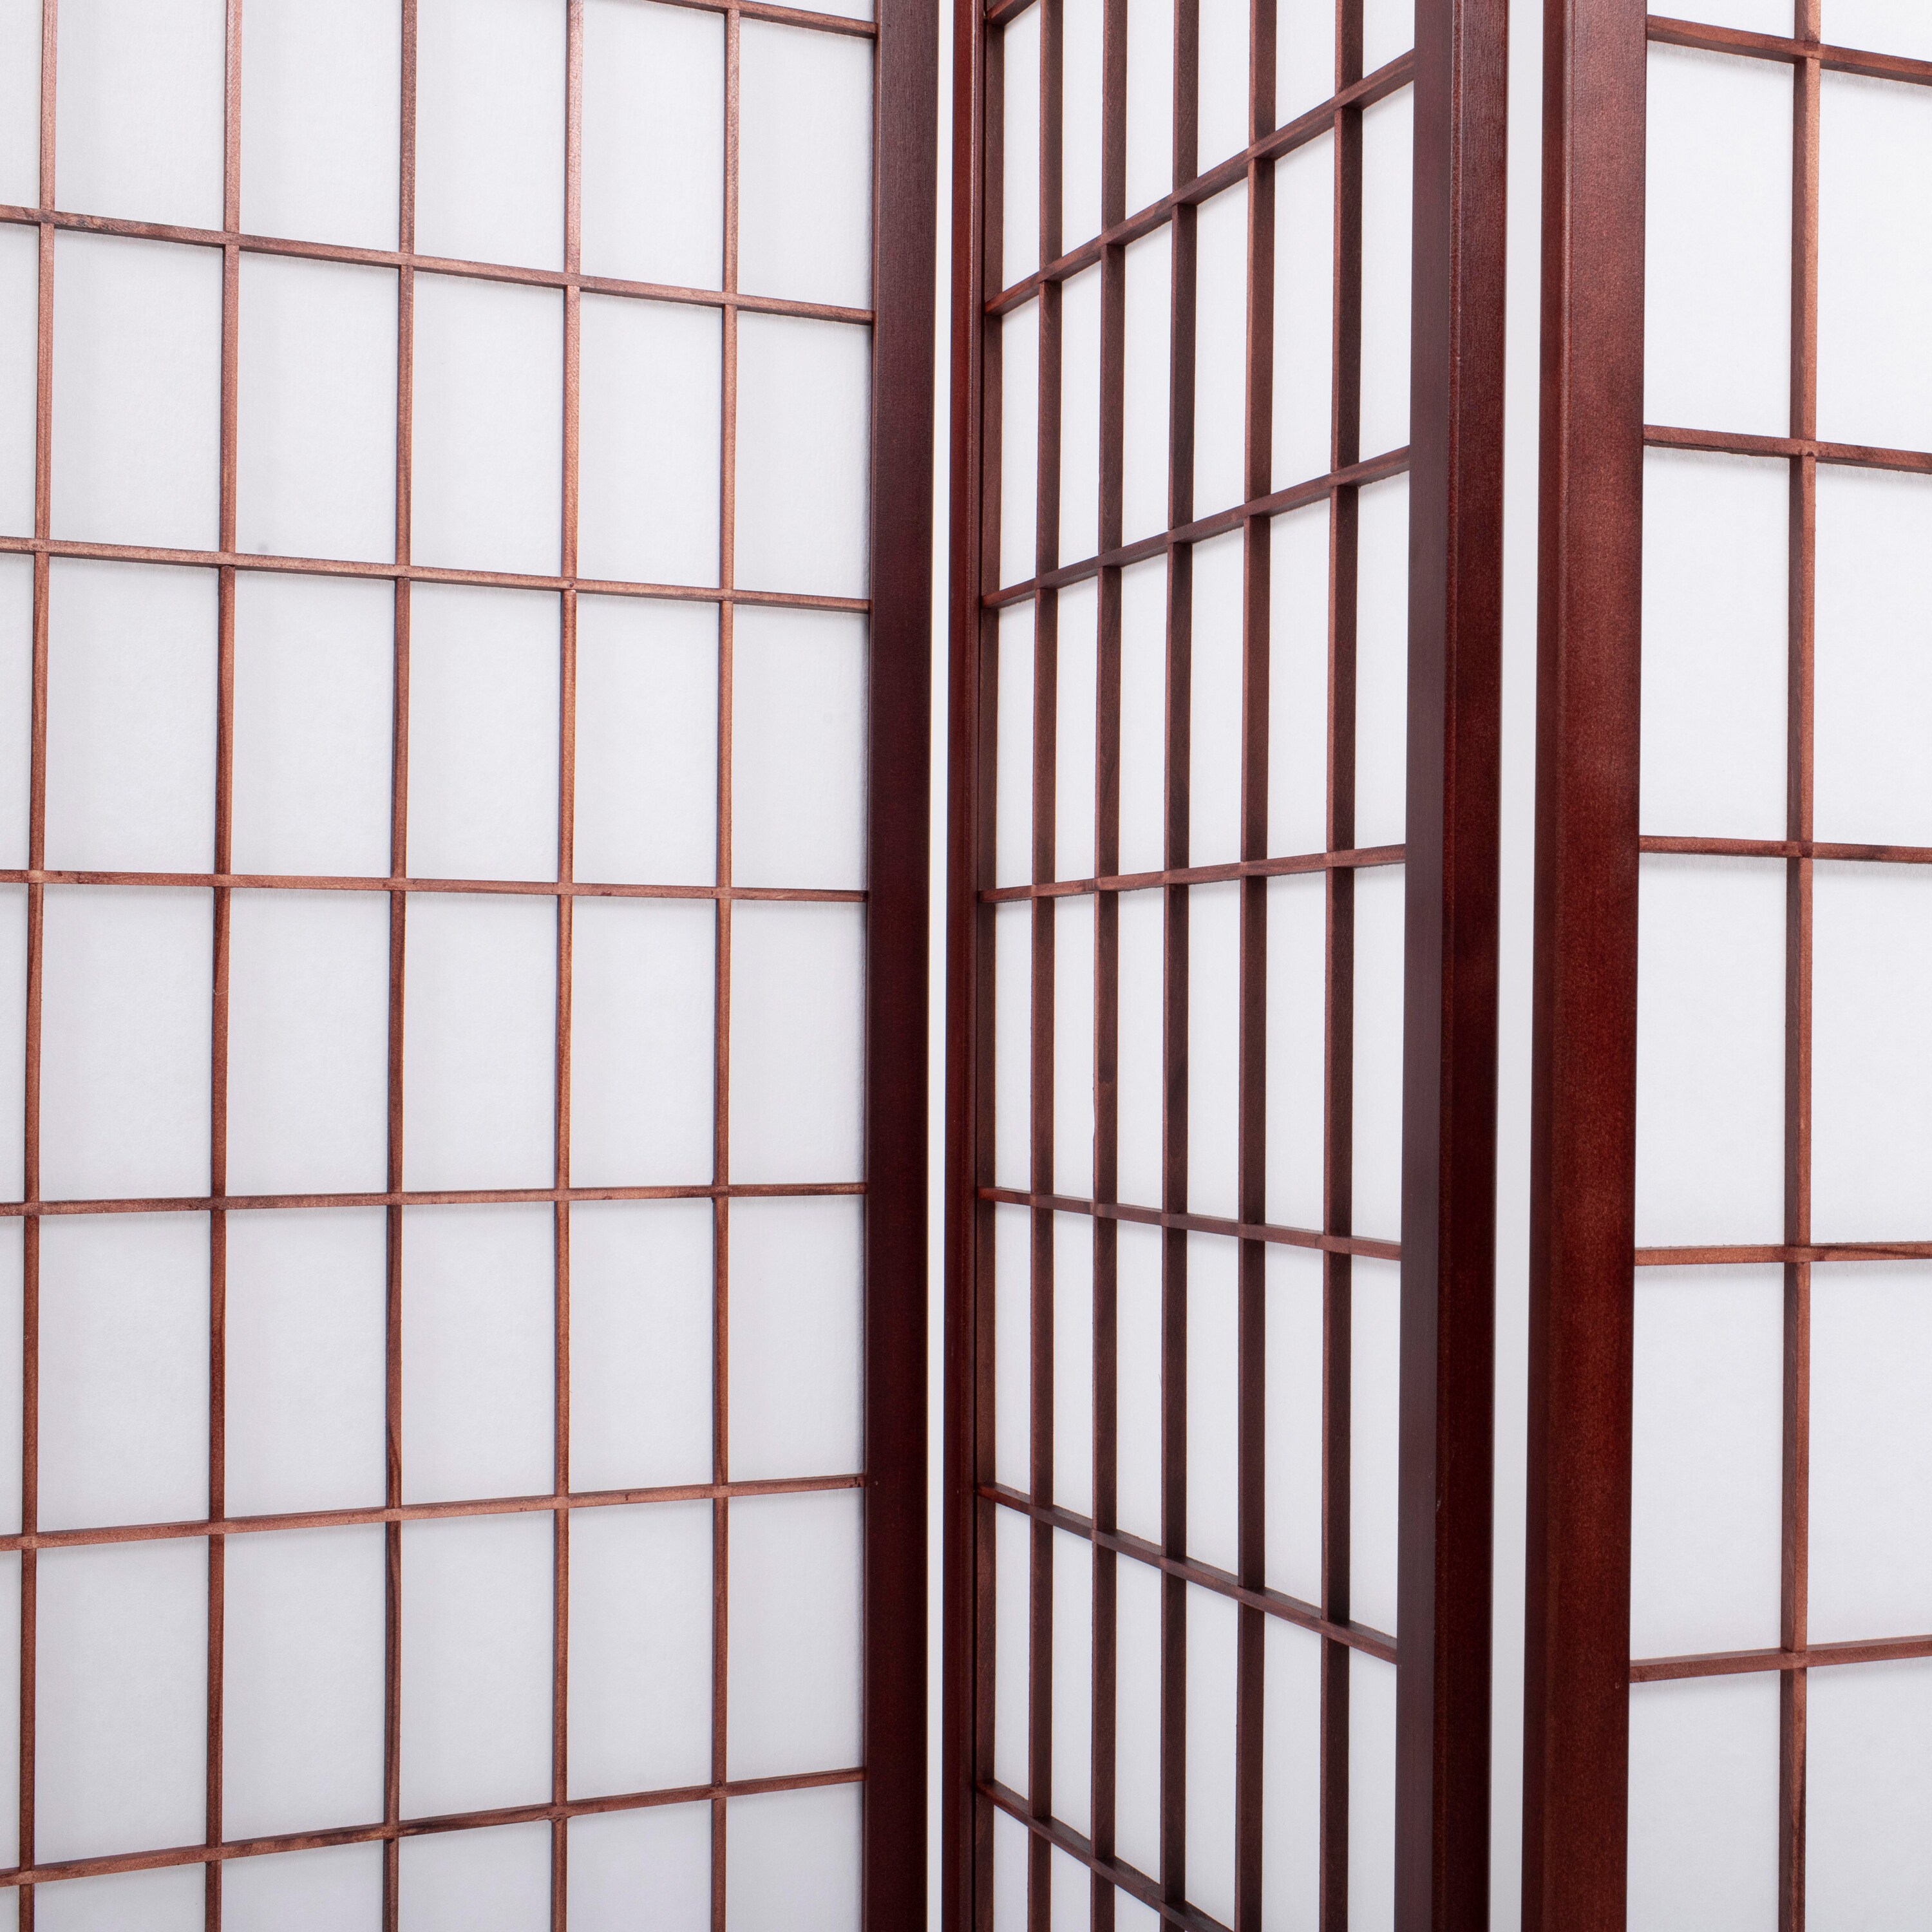 Stand Cherry,3 Panel High Quality Oriental Room Divider Hardwood Shoji Screen 